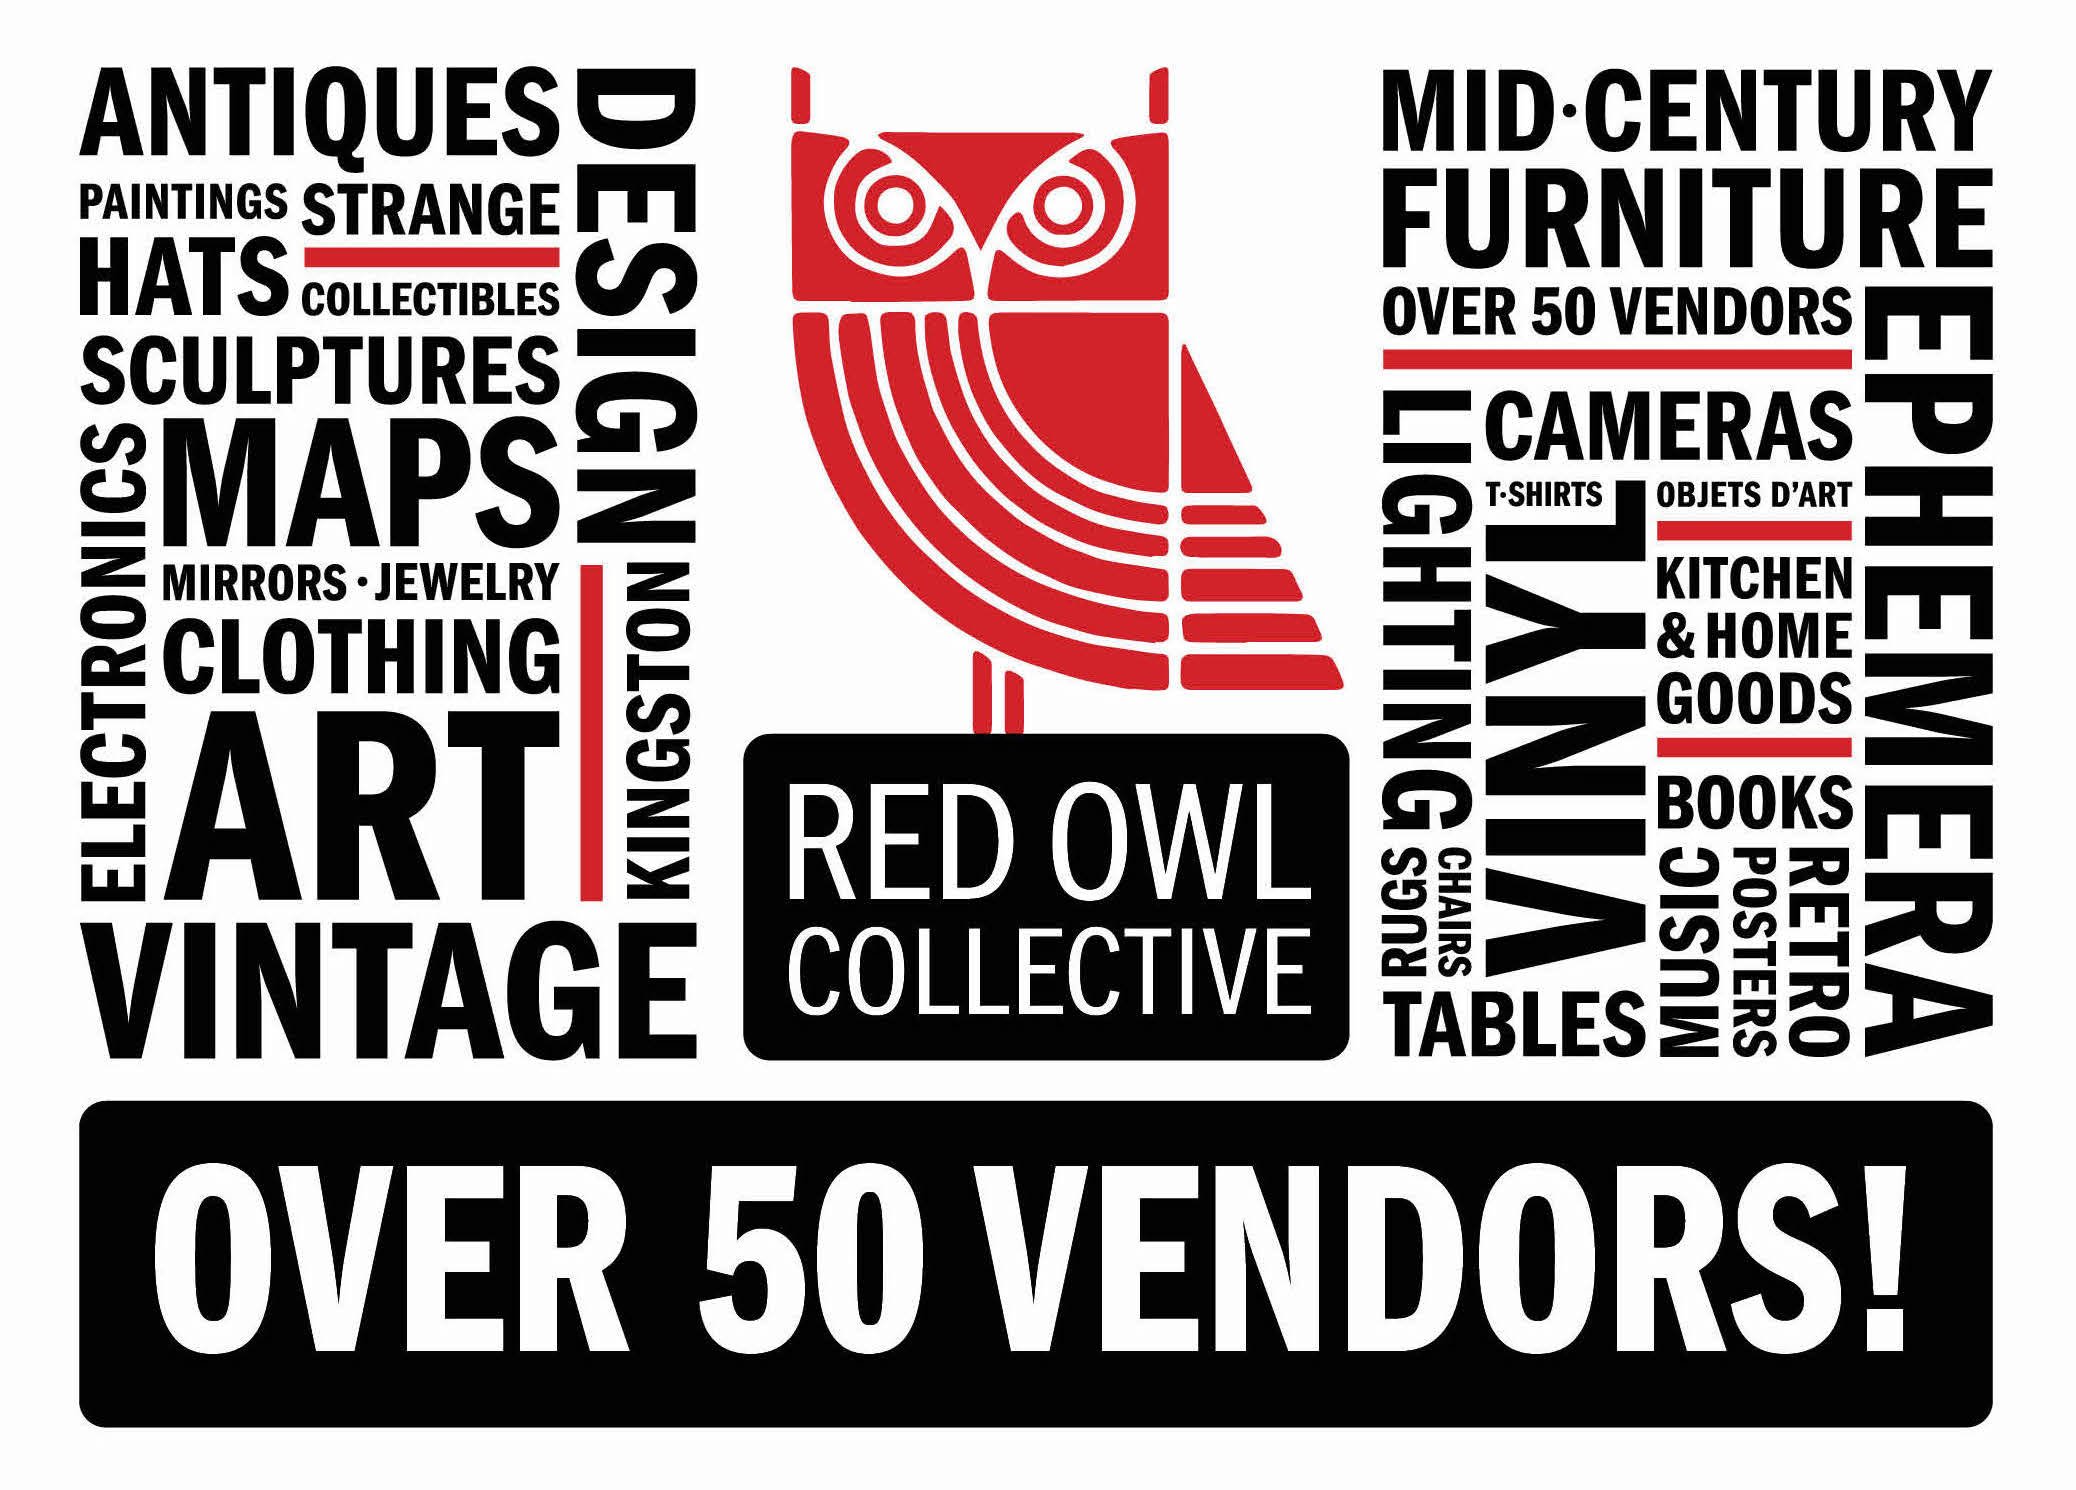 Red Owl Collective Multi Dealer Antique and Vintage Center Kingston New York Hudson Valley Carla Rozman Graphic Design.jpg